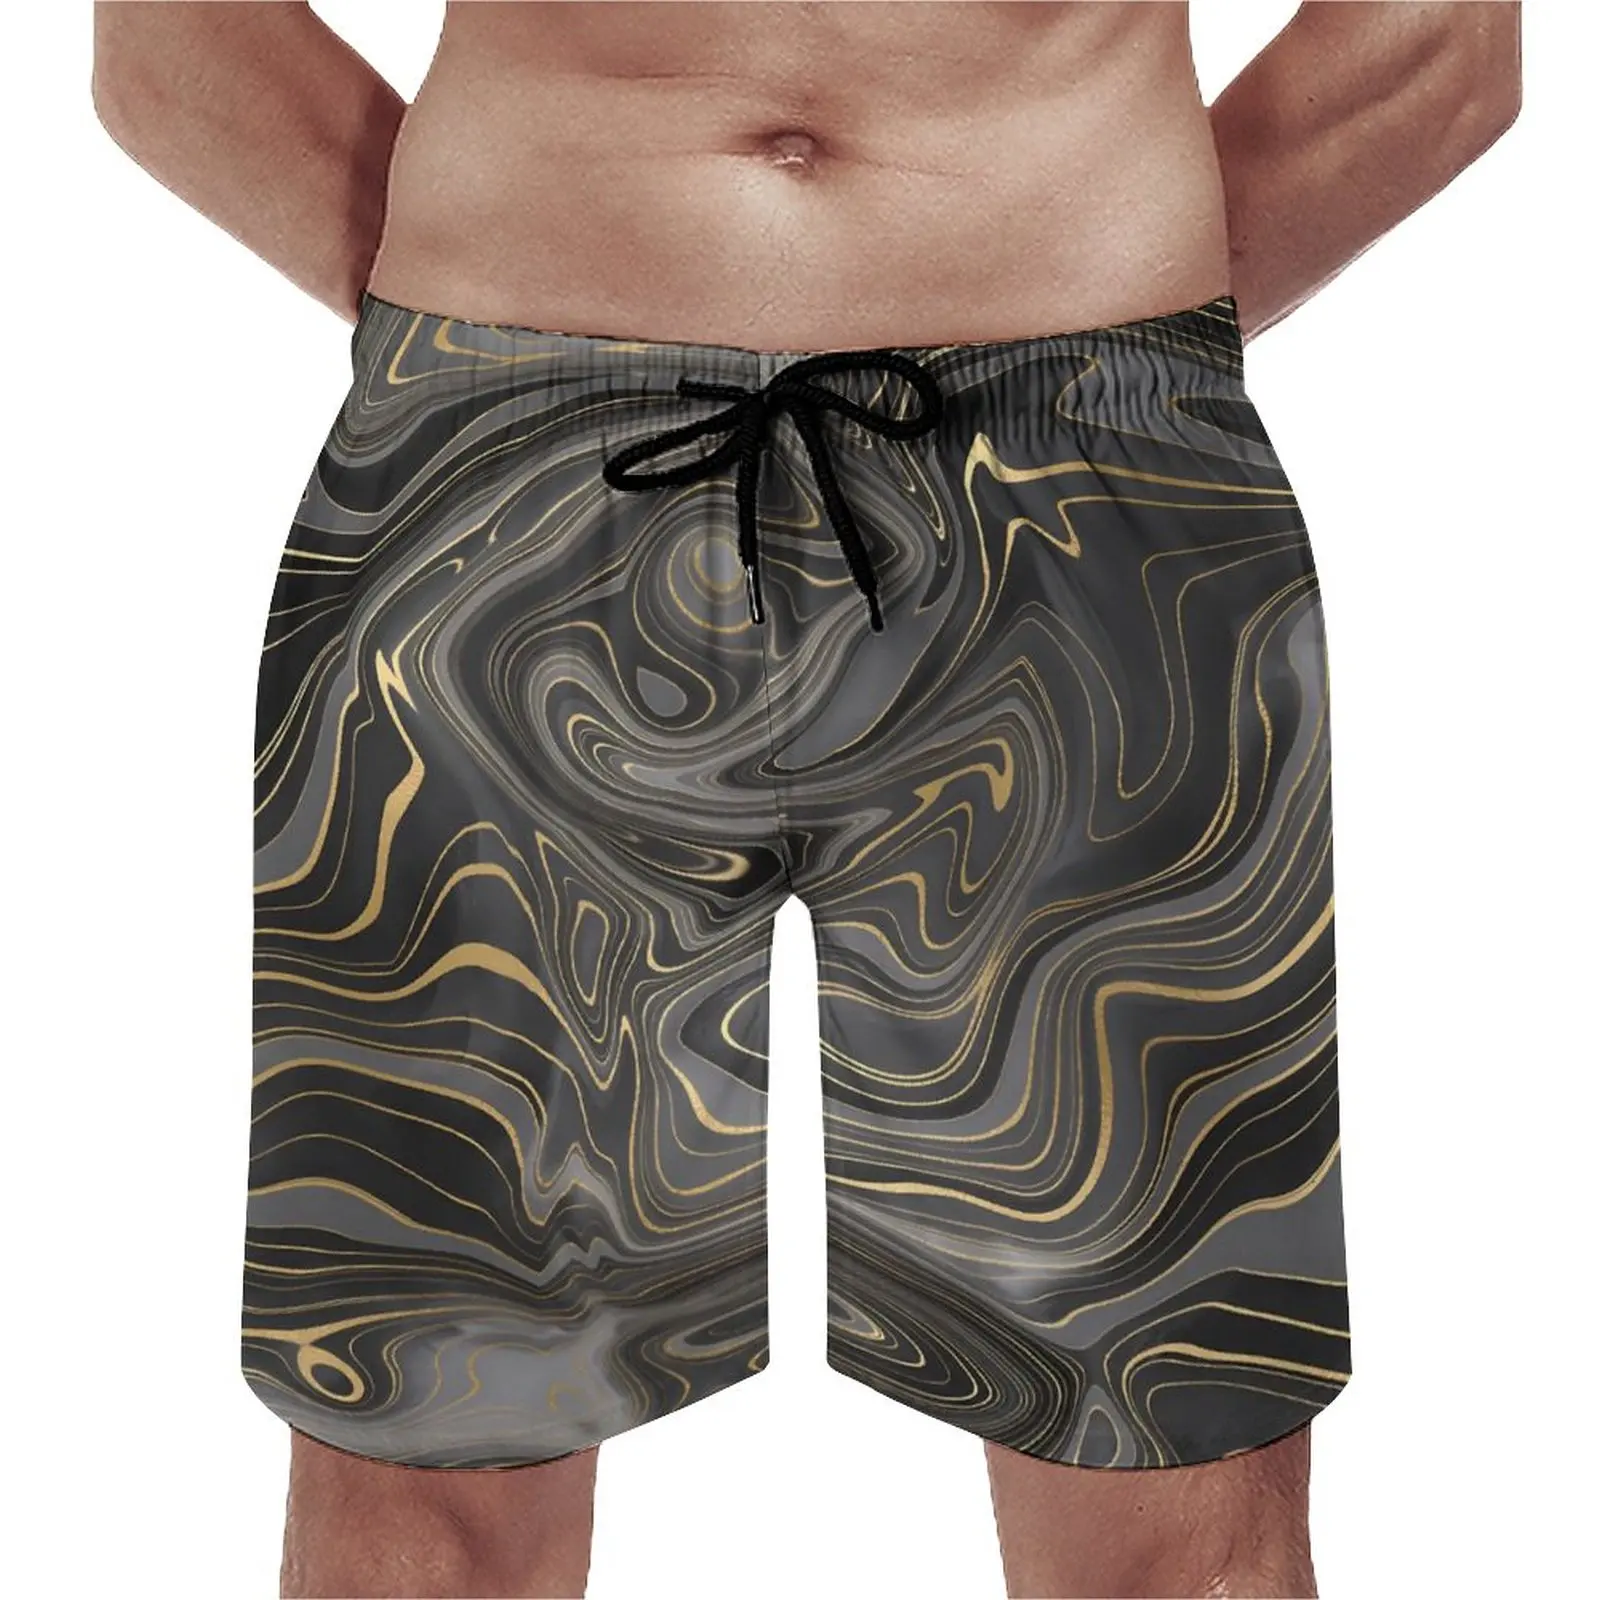 

Marble Print Gym Shorts Summer Black Gray Swirl Surfing Beach Shorts Men Comfortable Casual Custom Large Size Beach Trunks